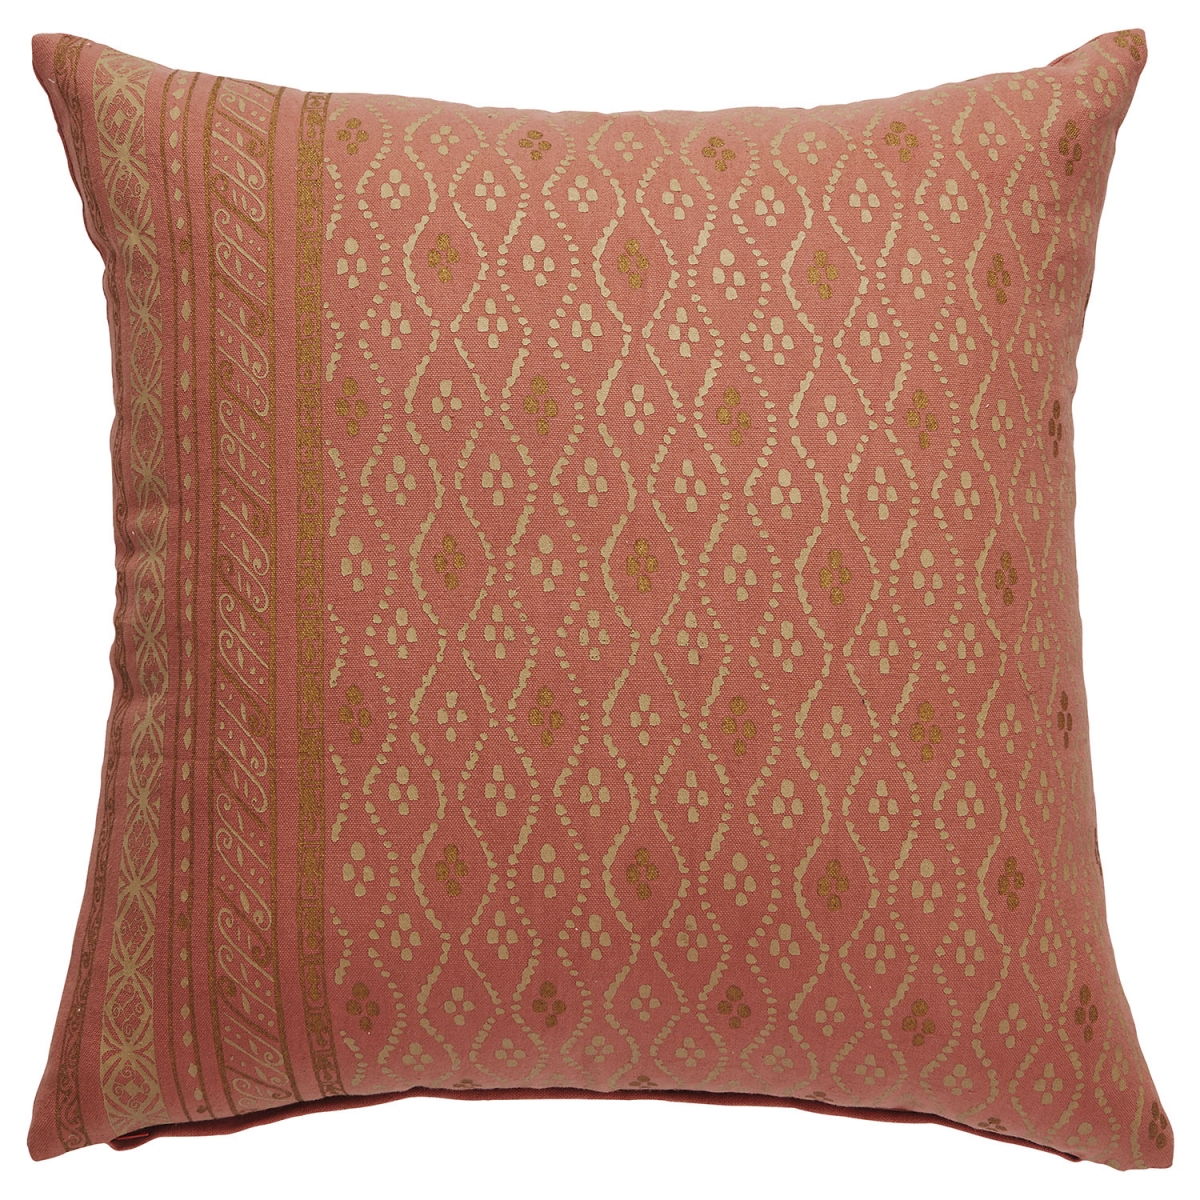 Plw102788 20 X 20 In. Charmed Jennifer Adams Nerissa Red & Gold Geometric Down Throw Pillow